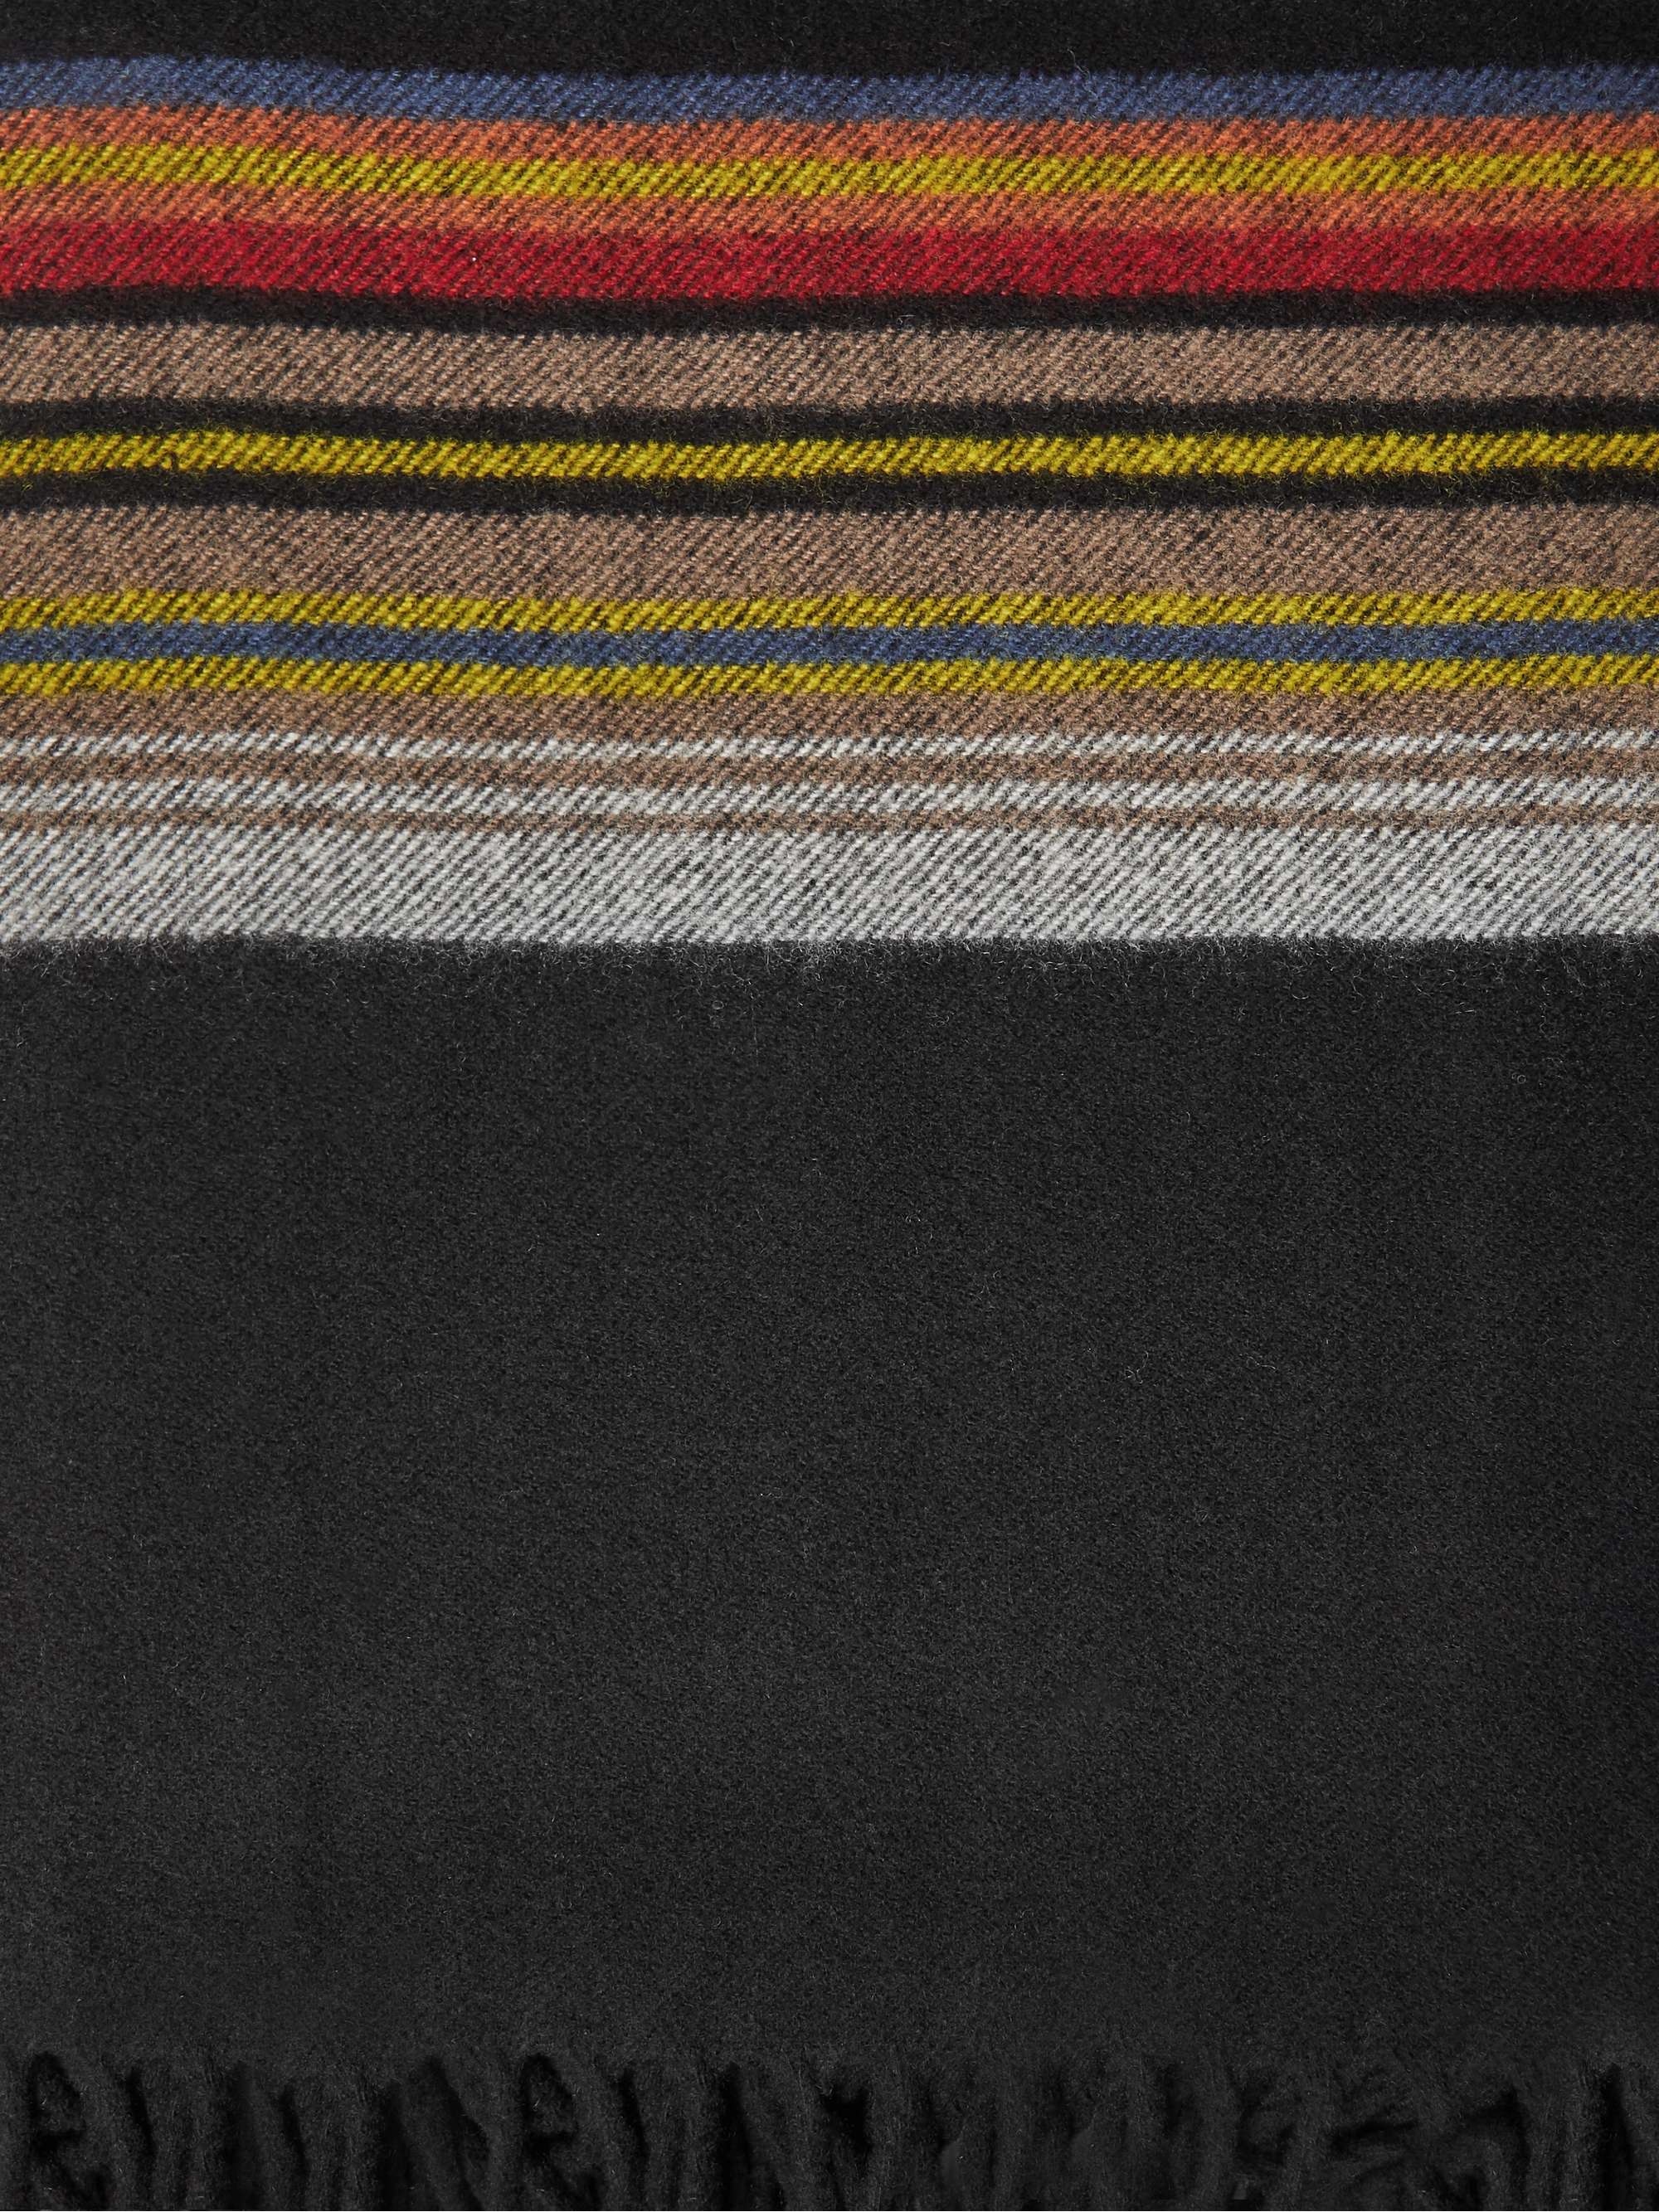 PENDLETON 5th Avenue Fringed Wool-Jacquard Blanket